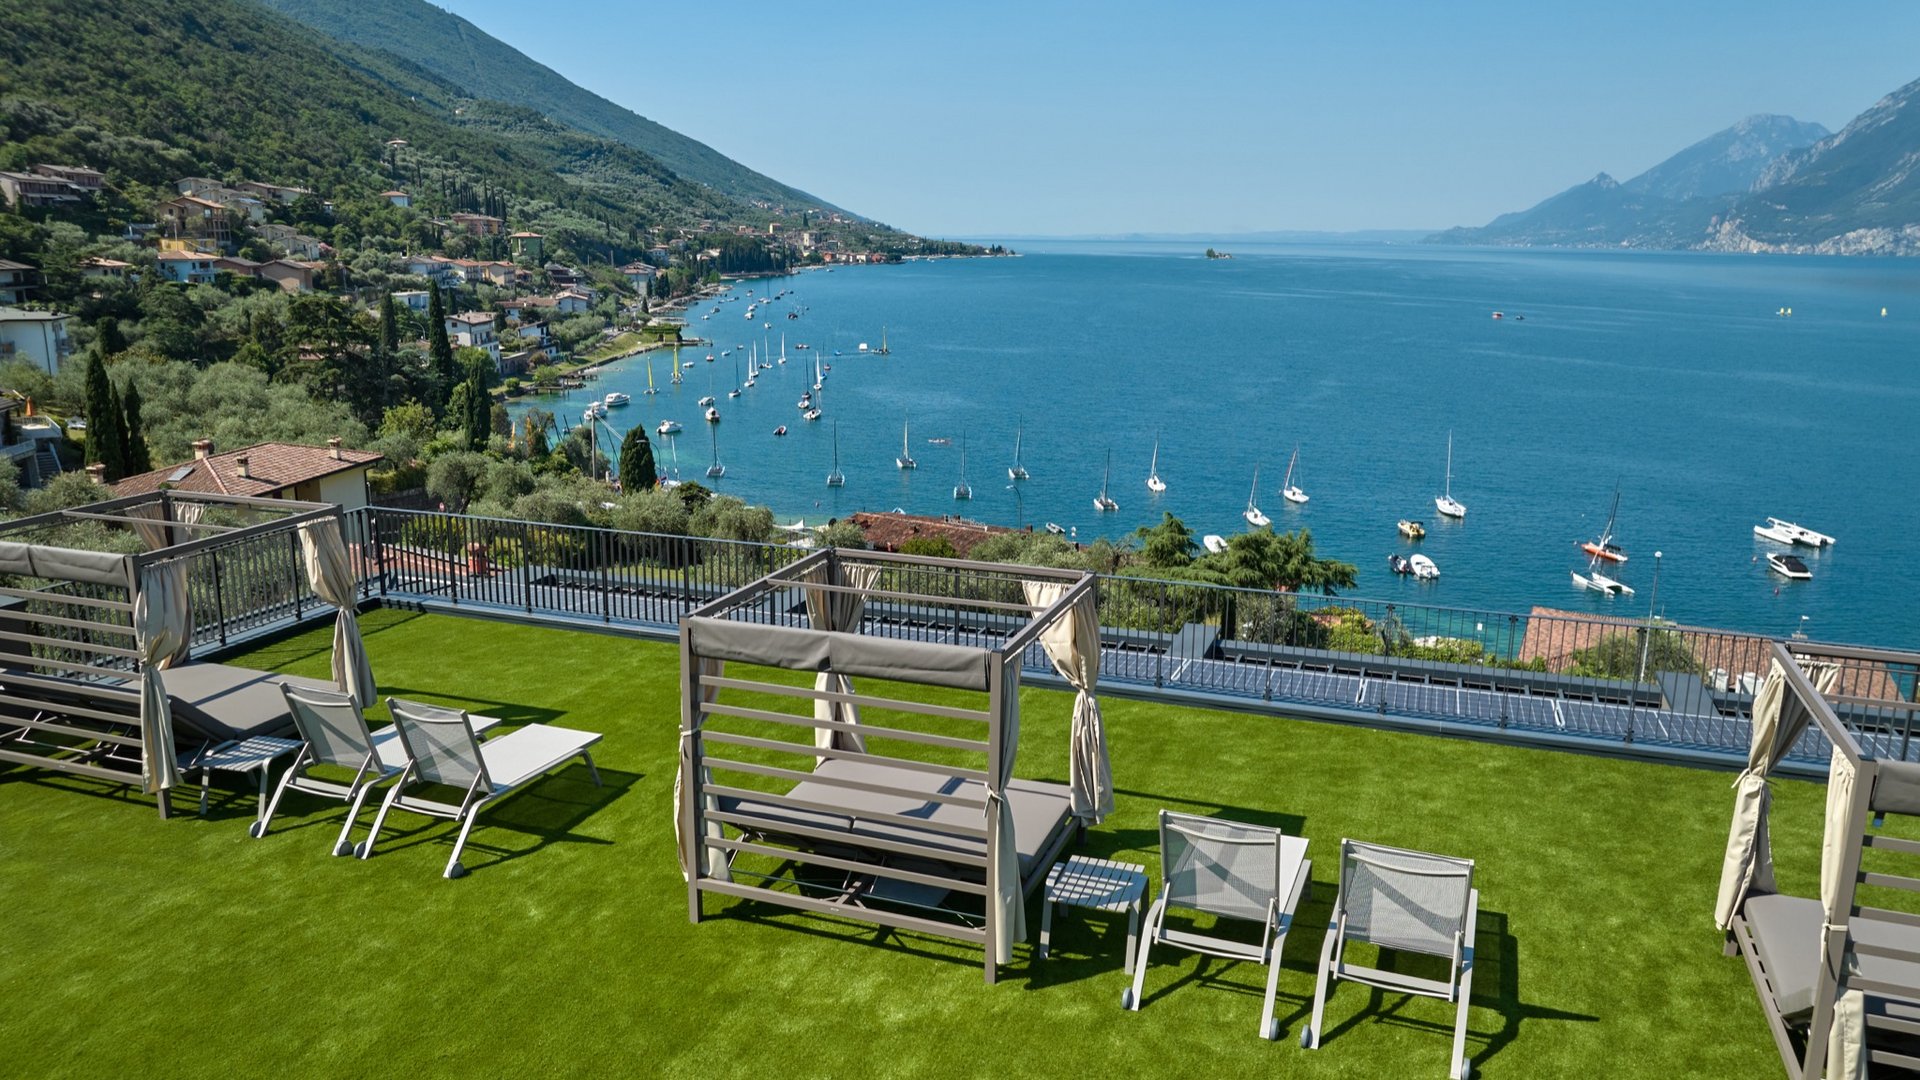 Hotel in Malcesine on Lake Garda: a relaxing dream